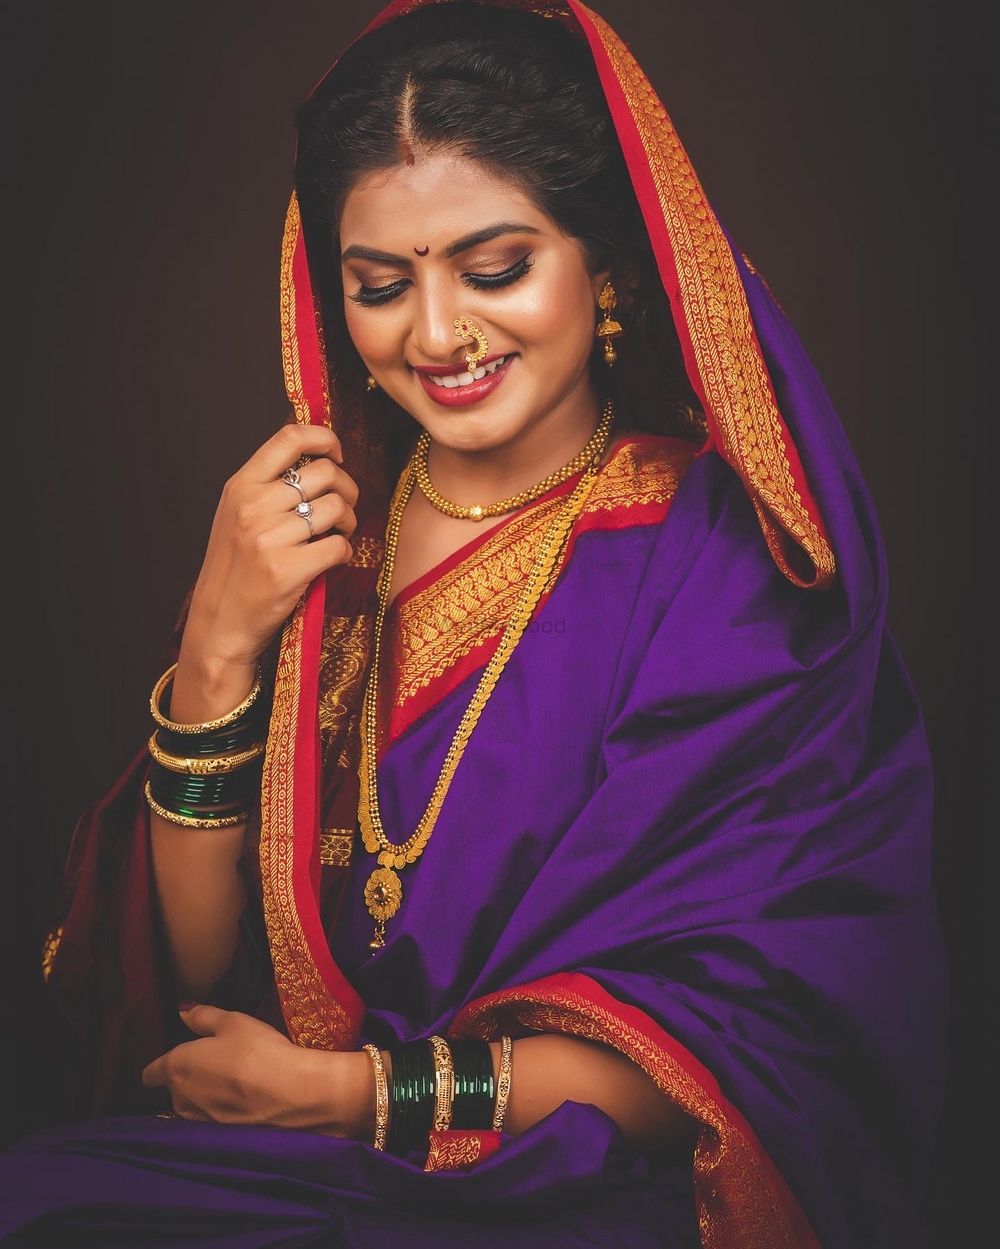 Photo From Maharashtrian Brides - By Makeup by Shradha